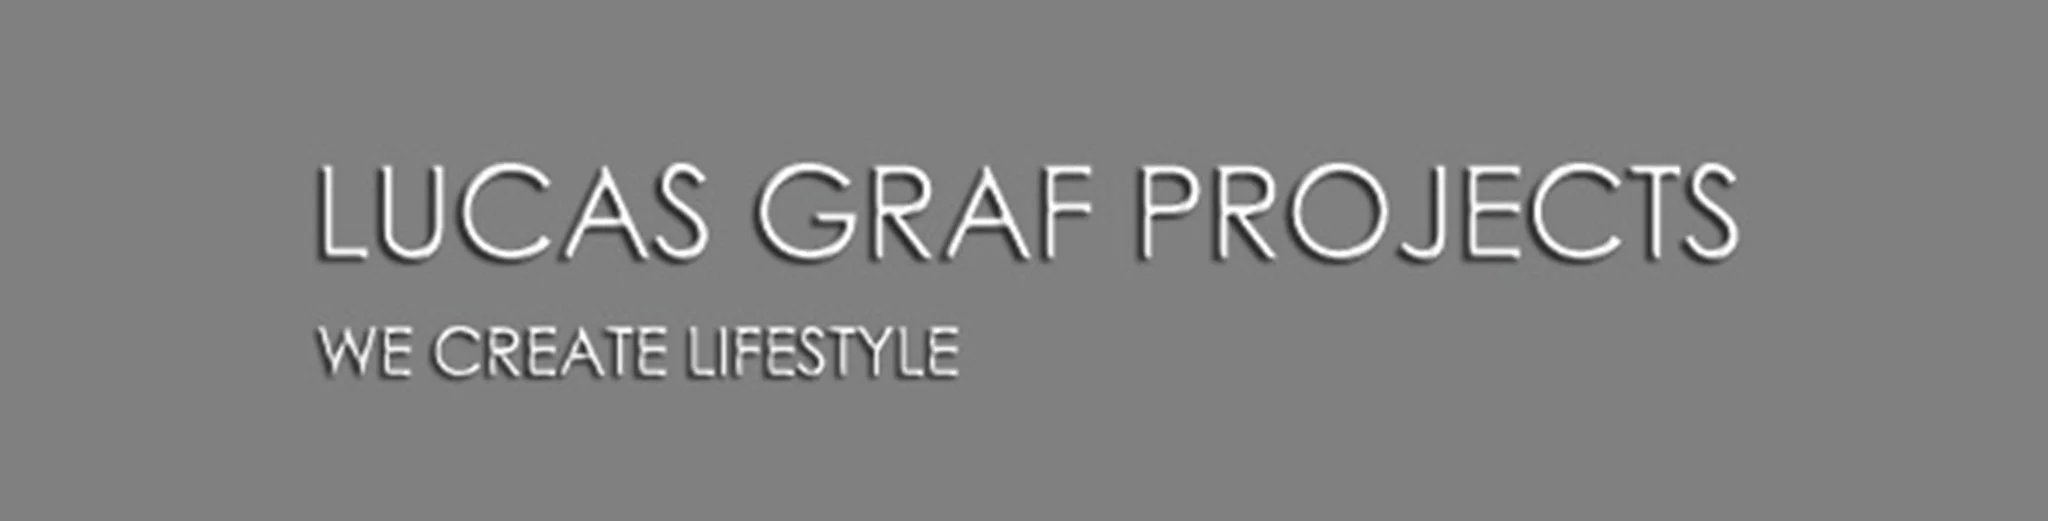 Logotipo de Lucas Graf Projects